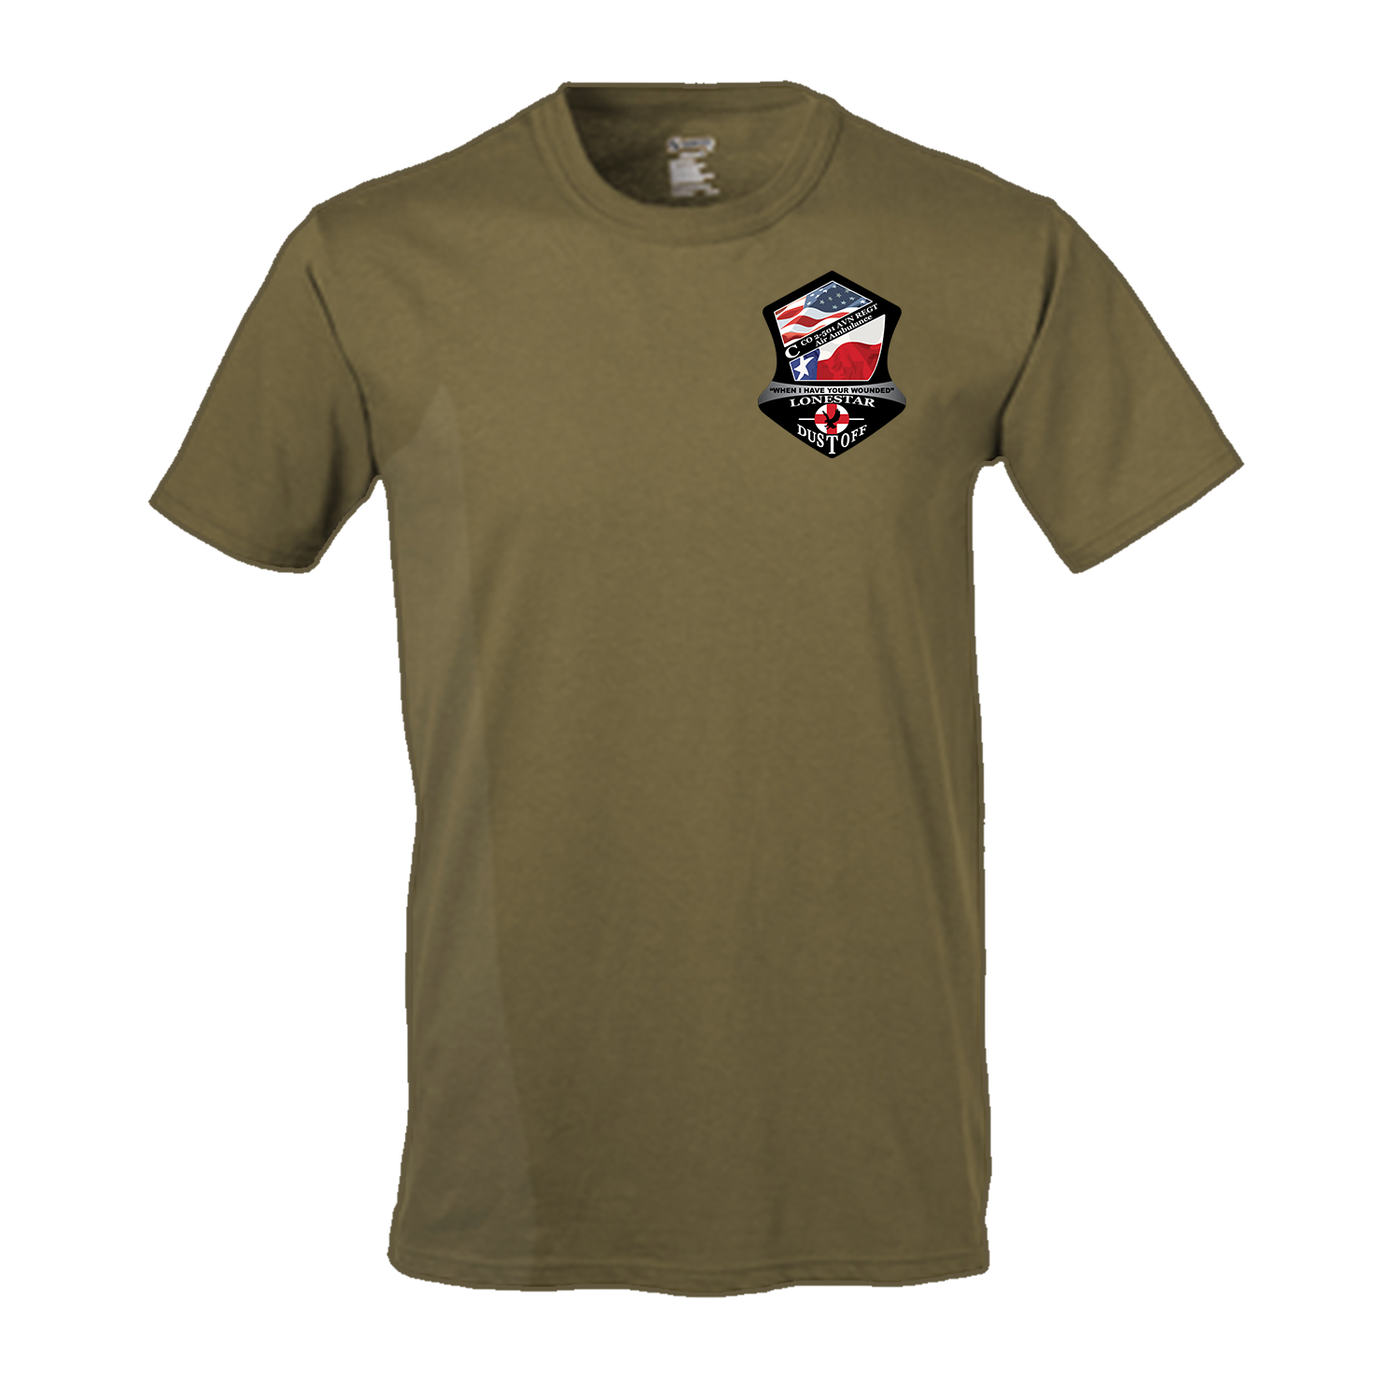 3 FSMP, C Co, 2-501 GSAB "The Herd" Flight Approved T-Shirt